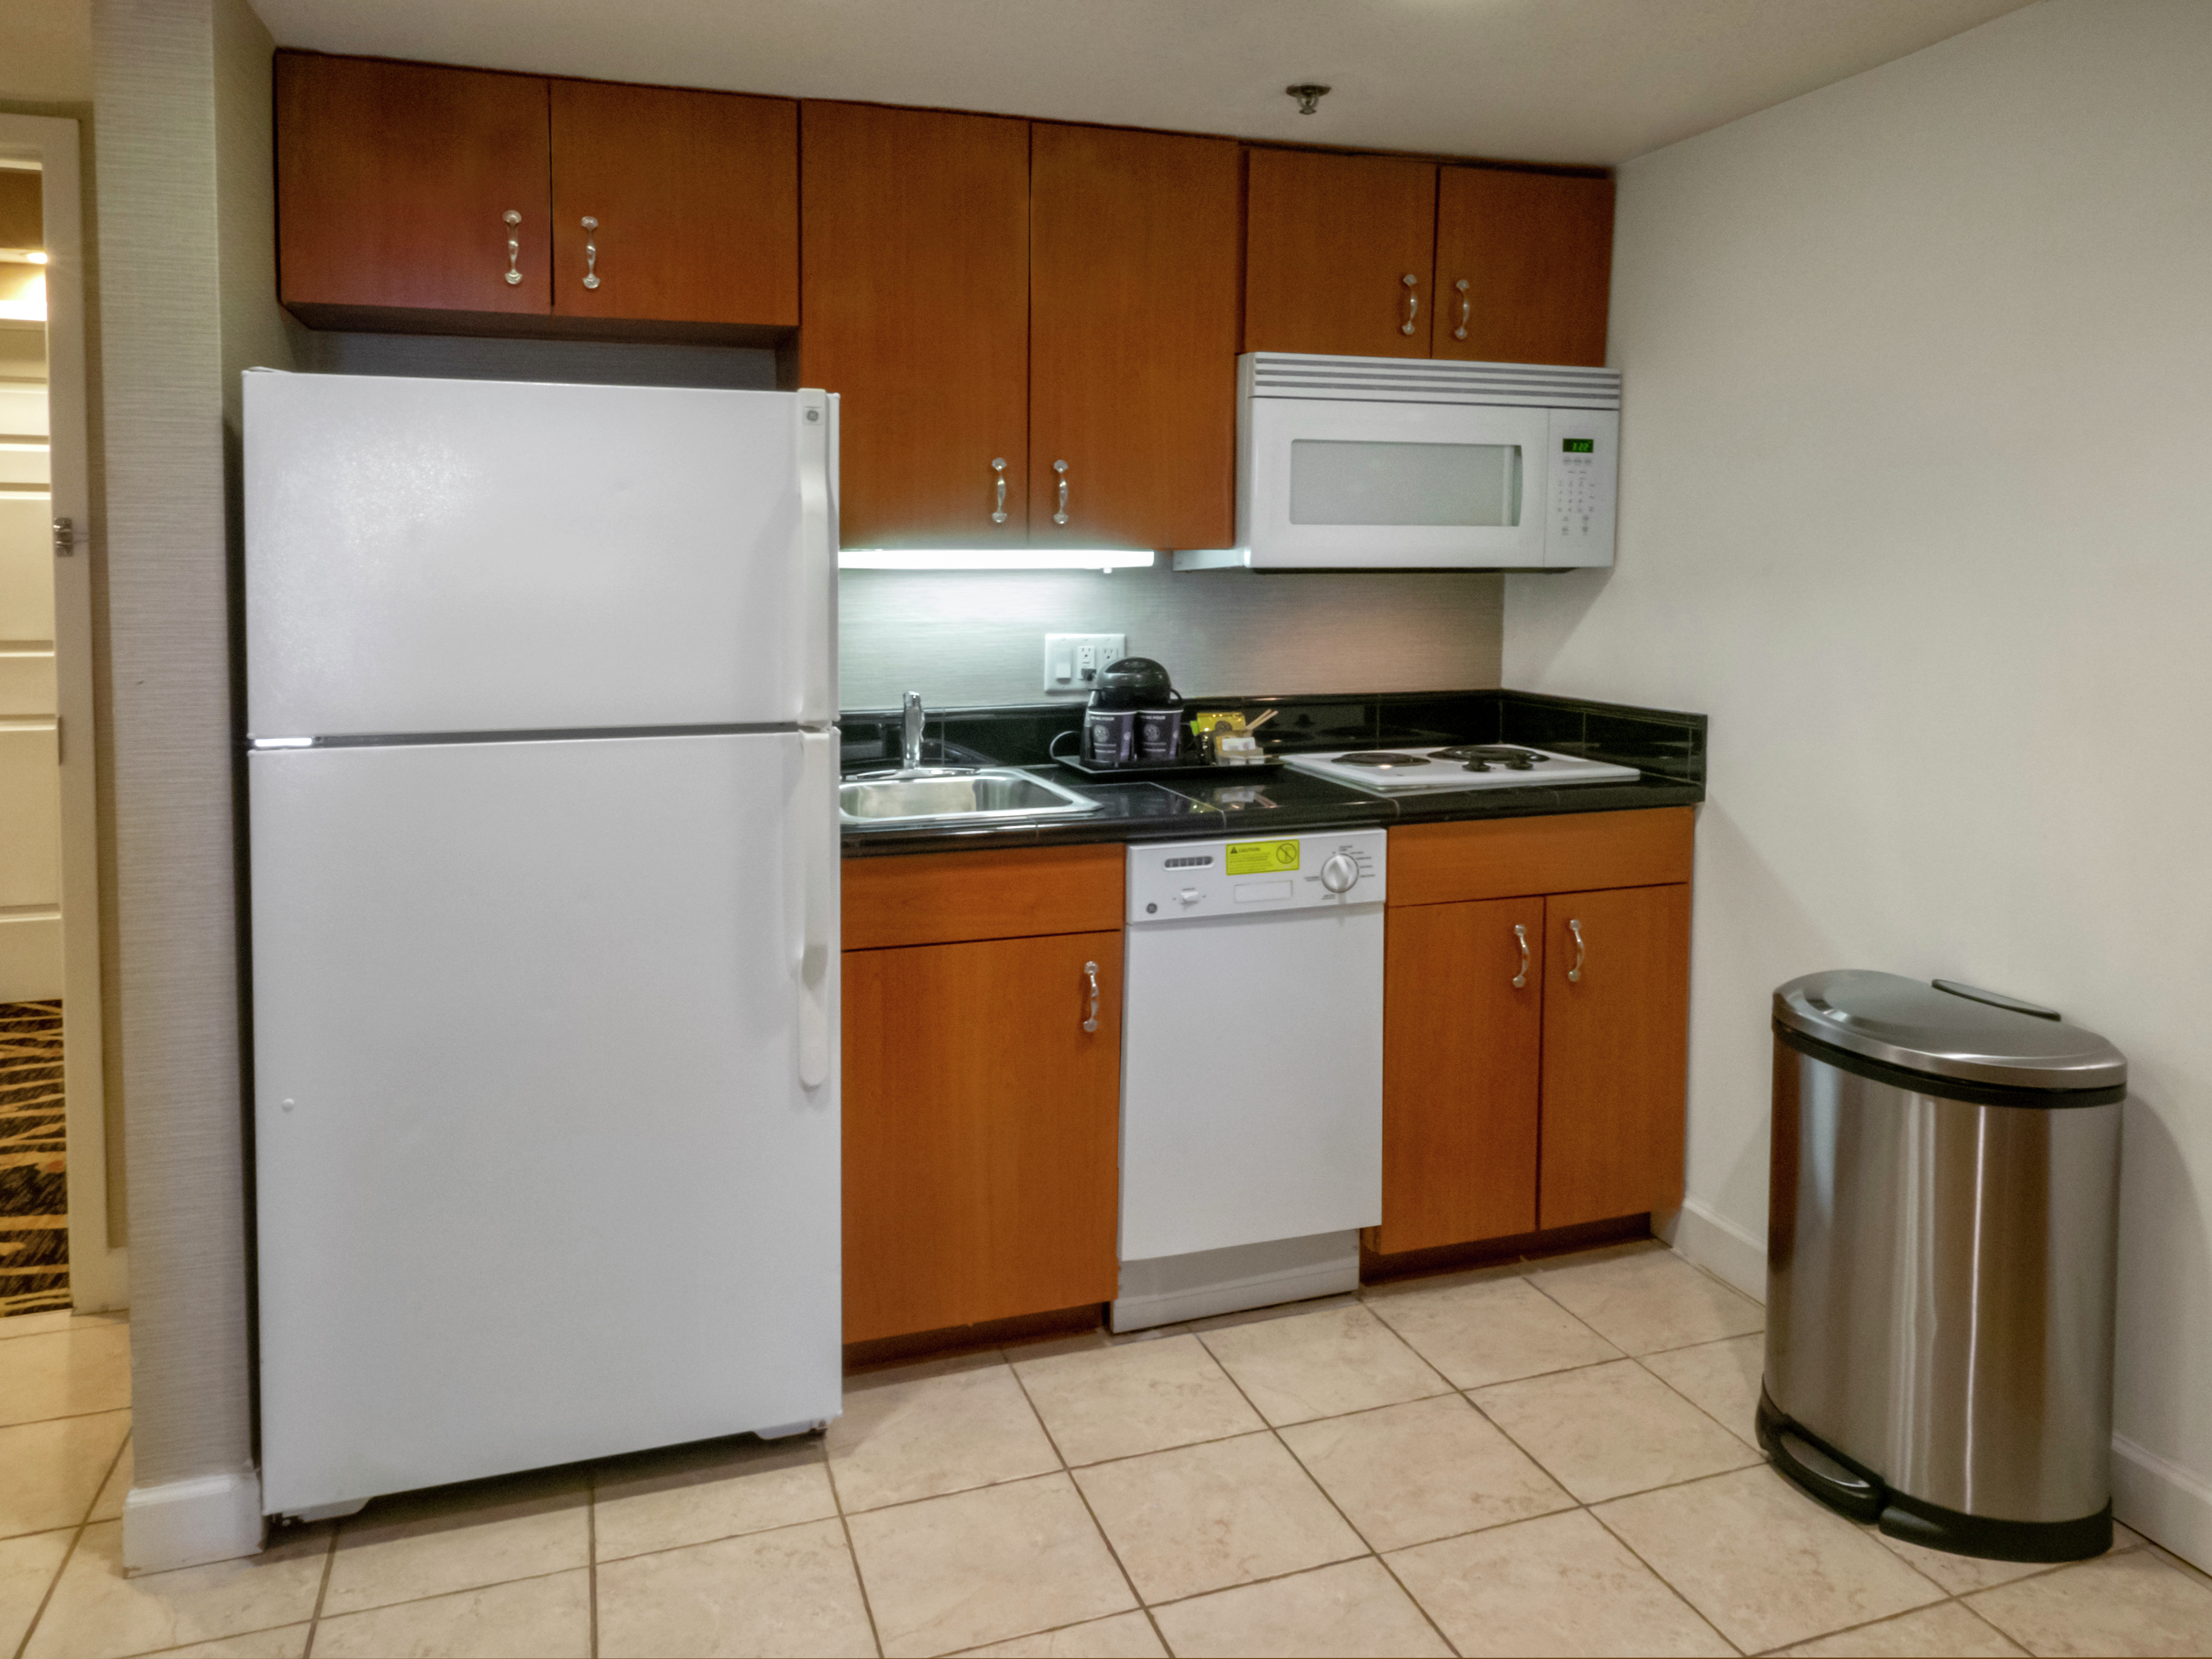 Suite Kitchen Area with Appliances